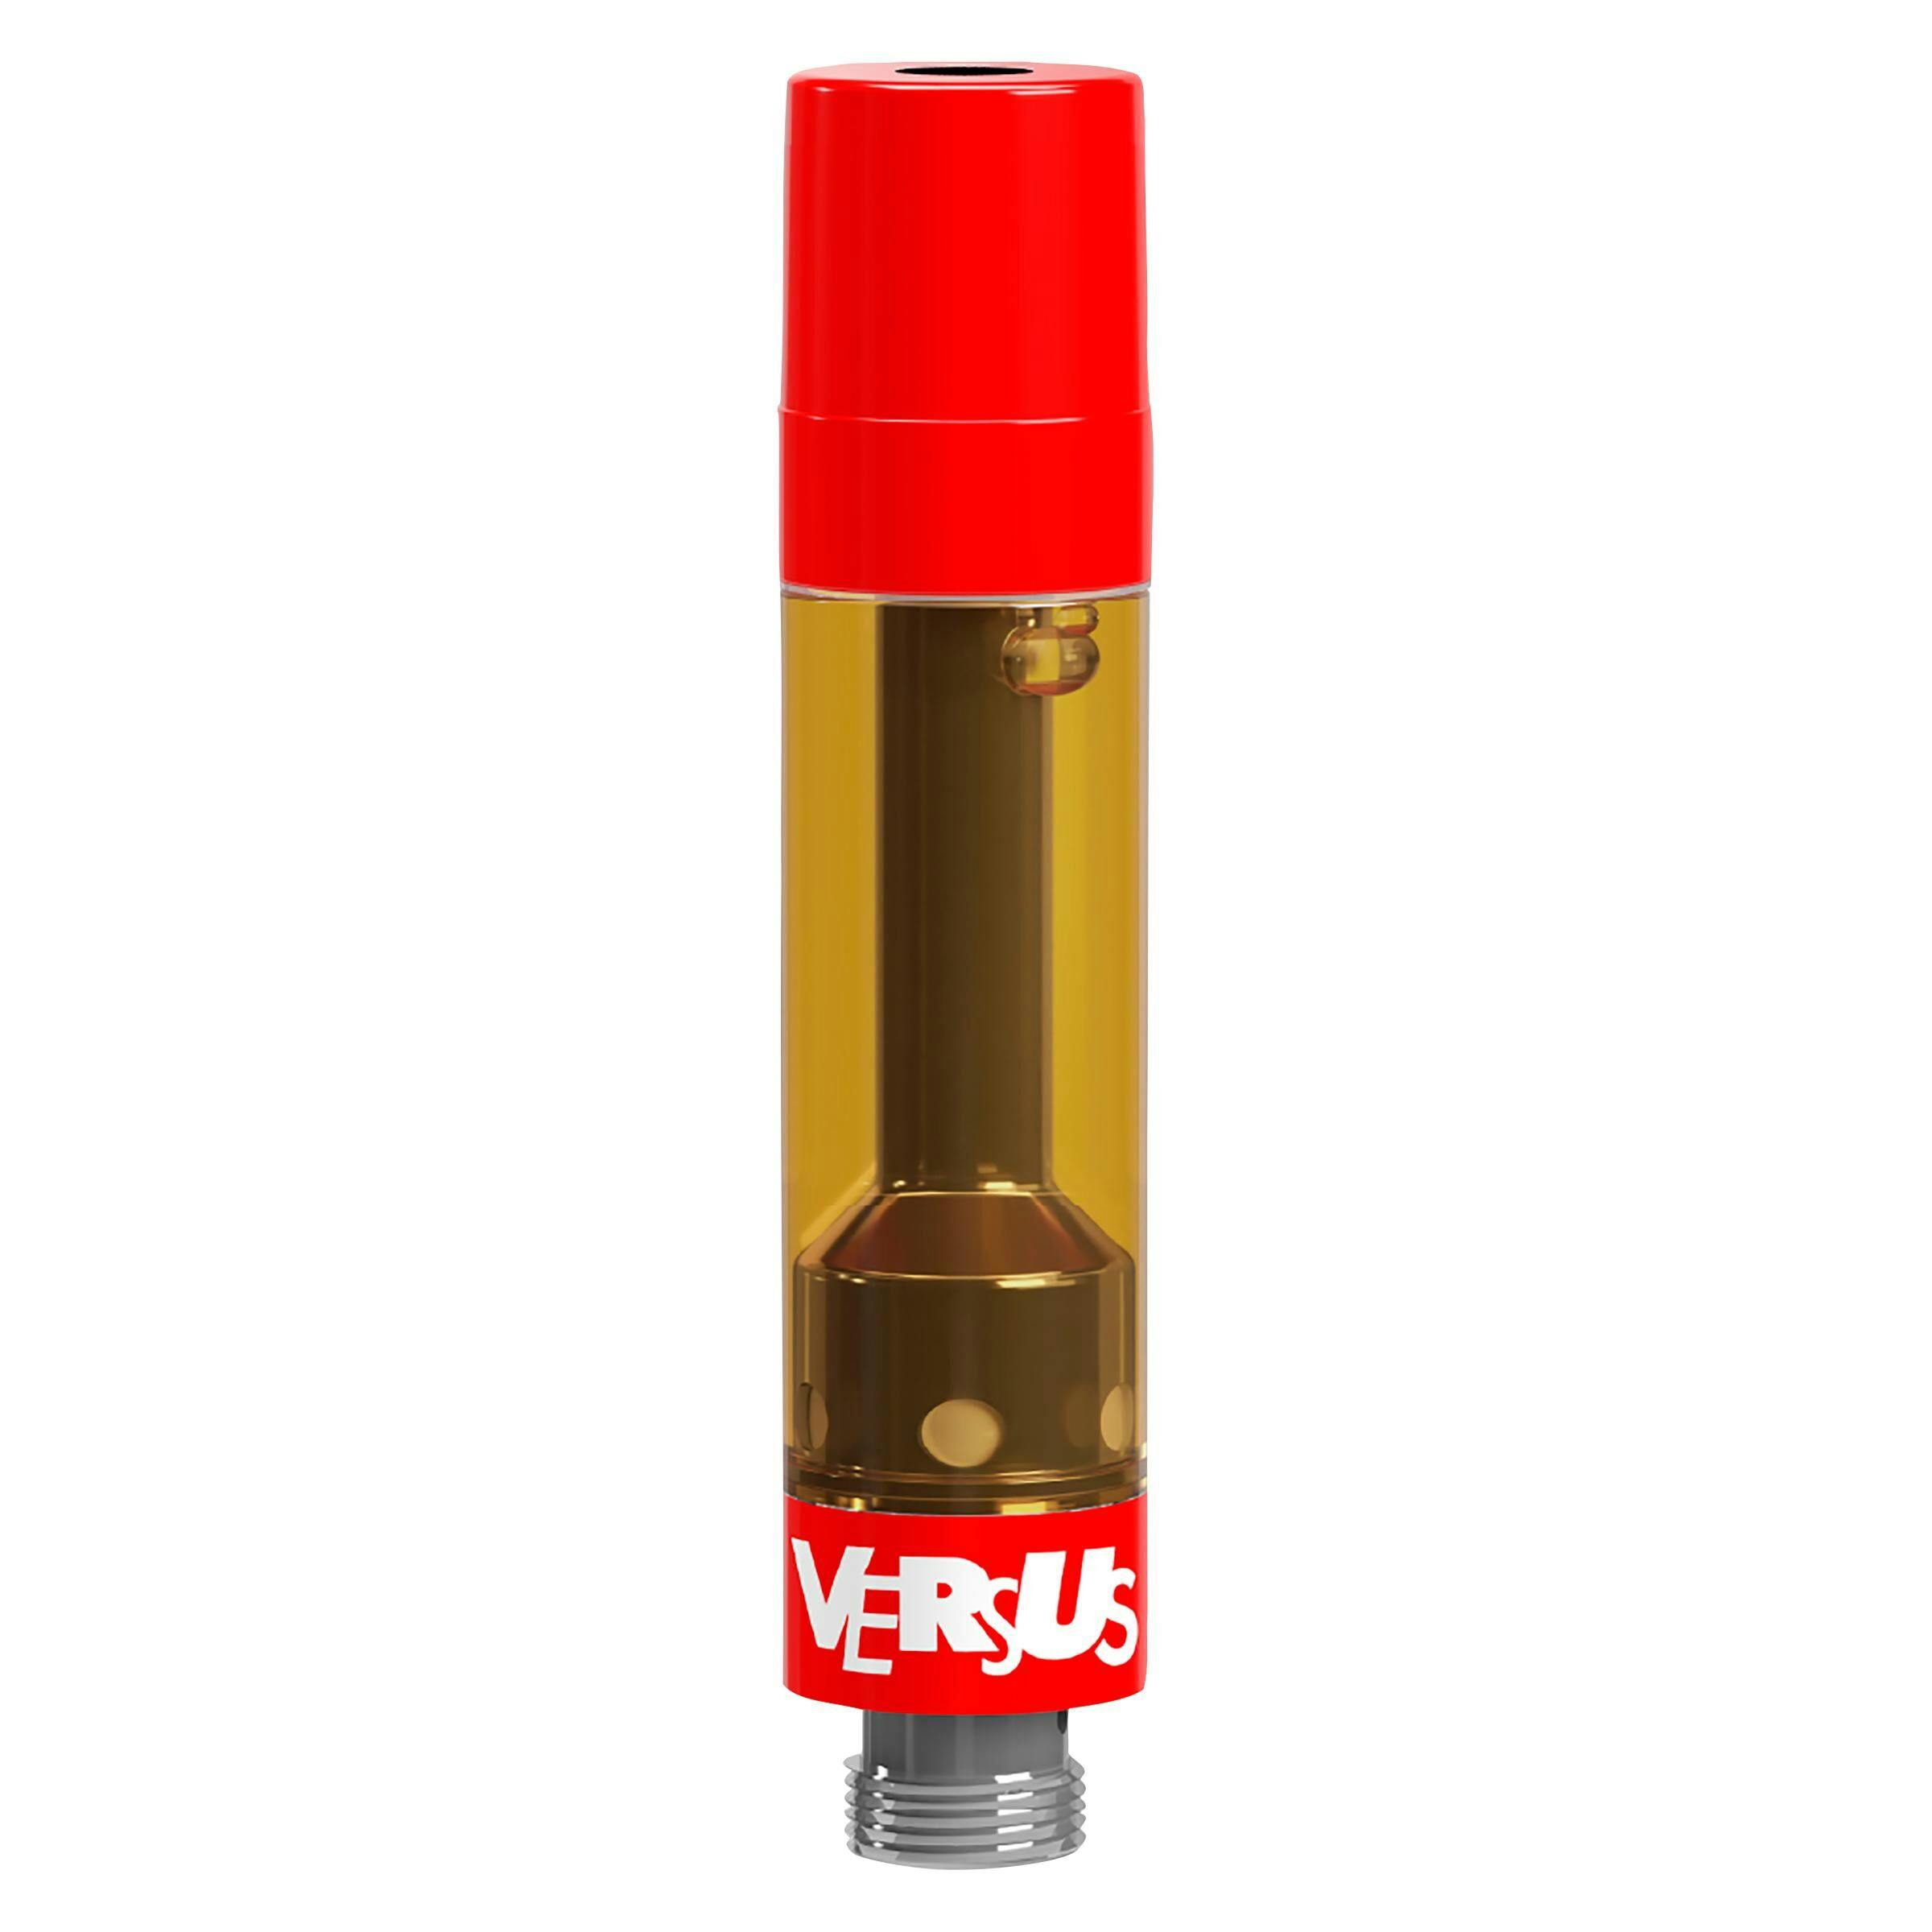 Versus - Black Cherry OG 510 Thread Cartridge - Hybrid | Cannabis 